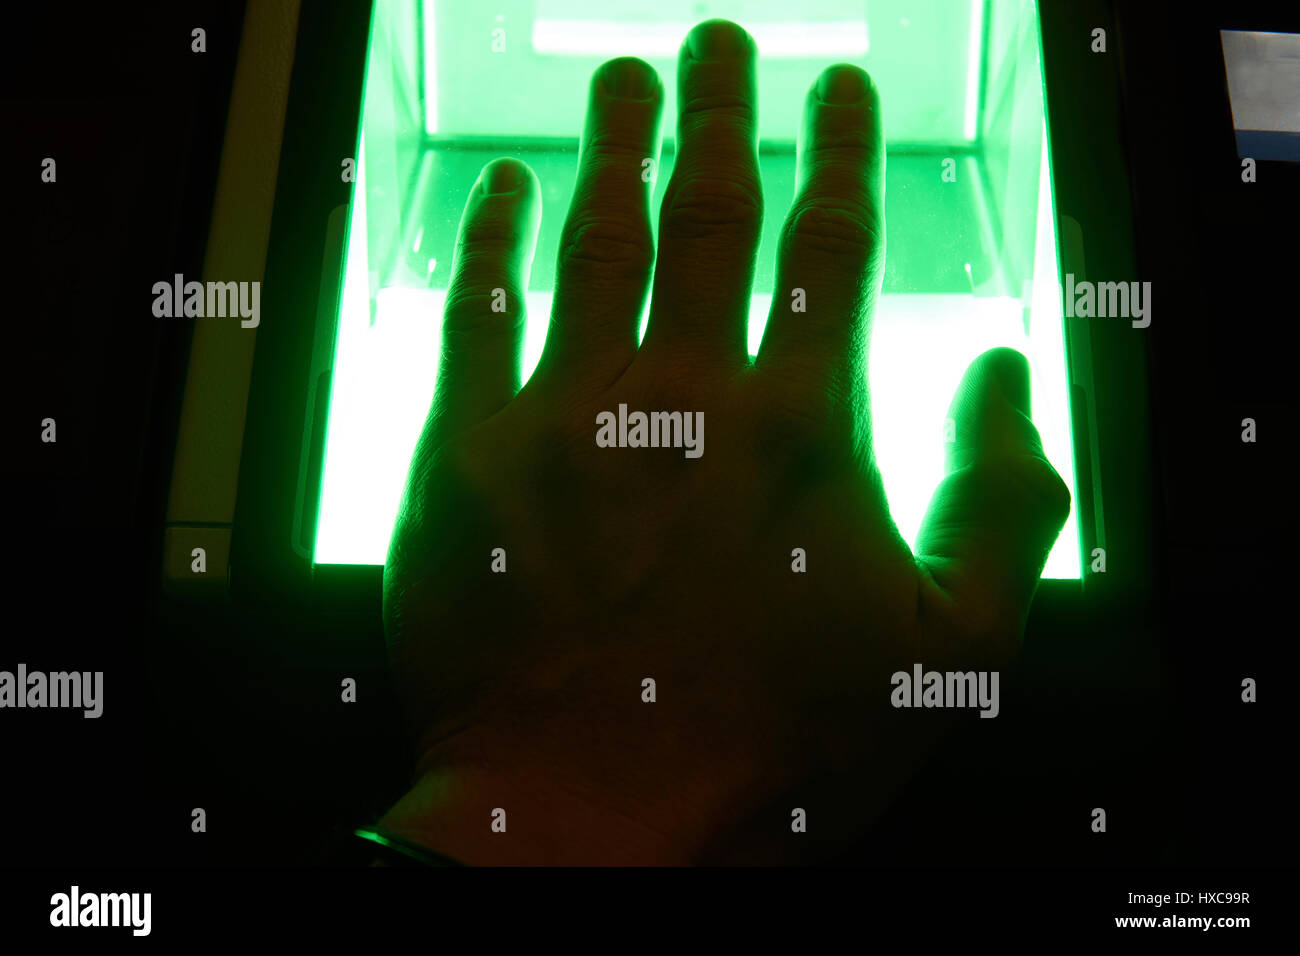 cybersecurity digital fingerprint scanning Stock Photo